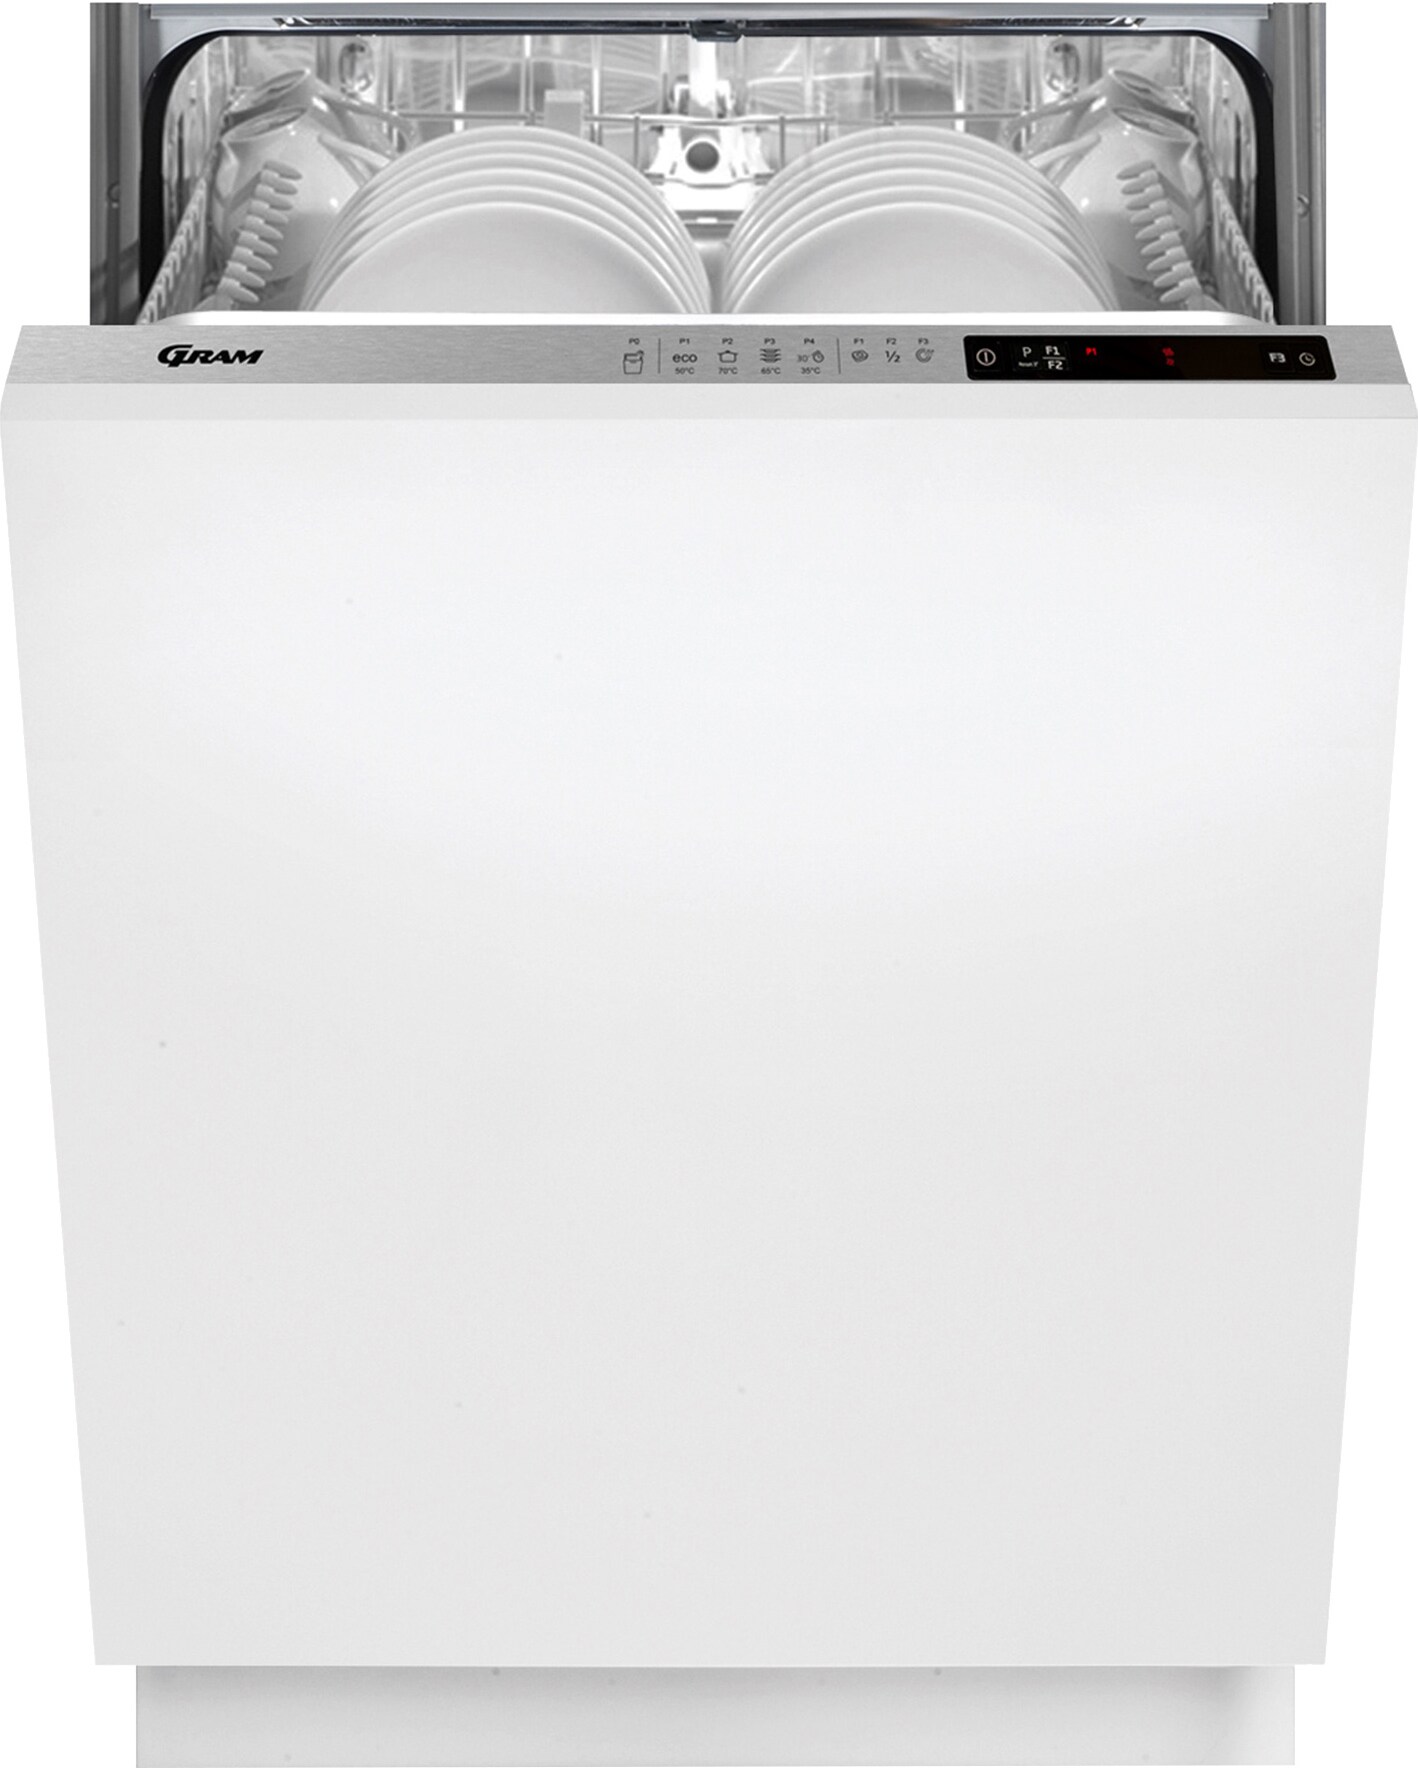 Gram opvaskemaskine OMI62081 - Integrerede opvaskemaskiner - Elgiganten